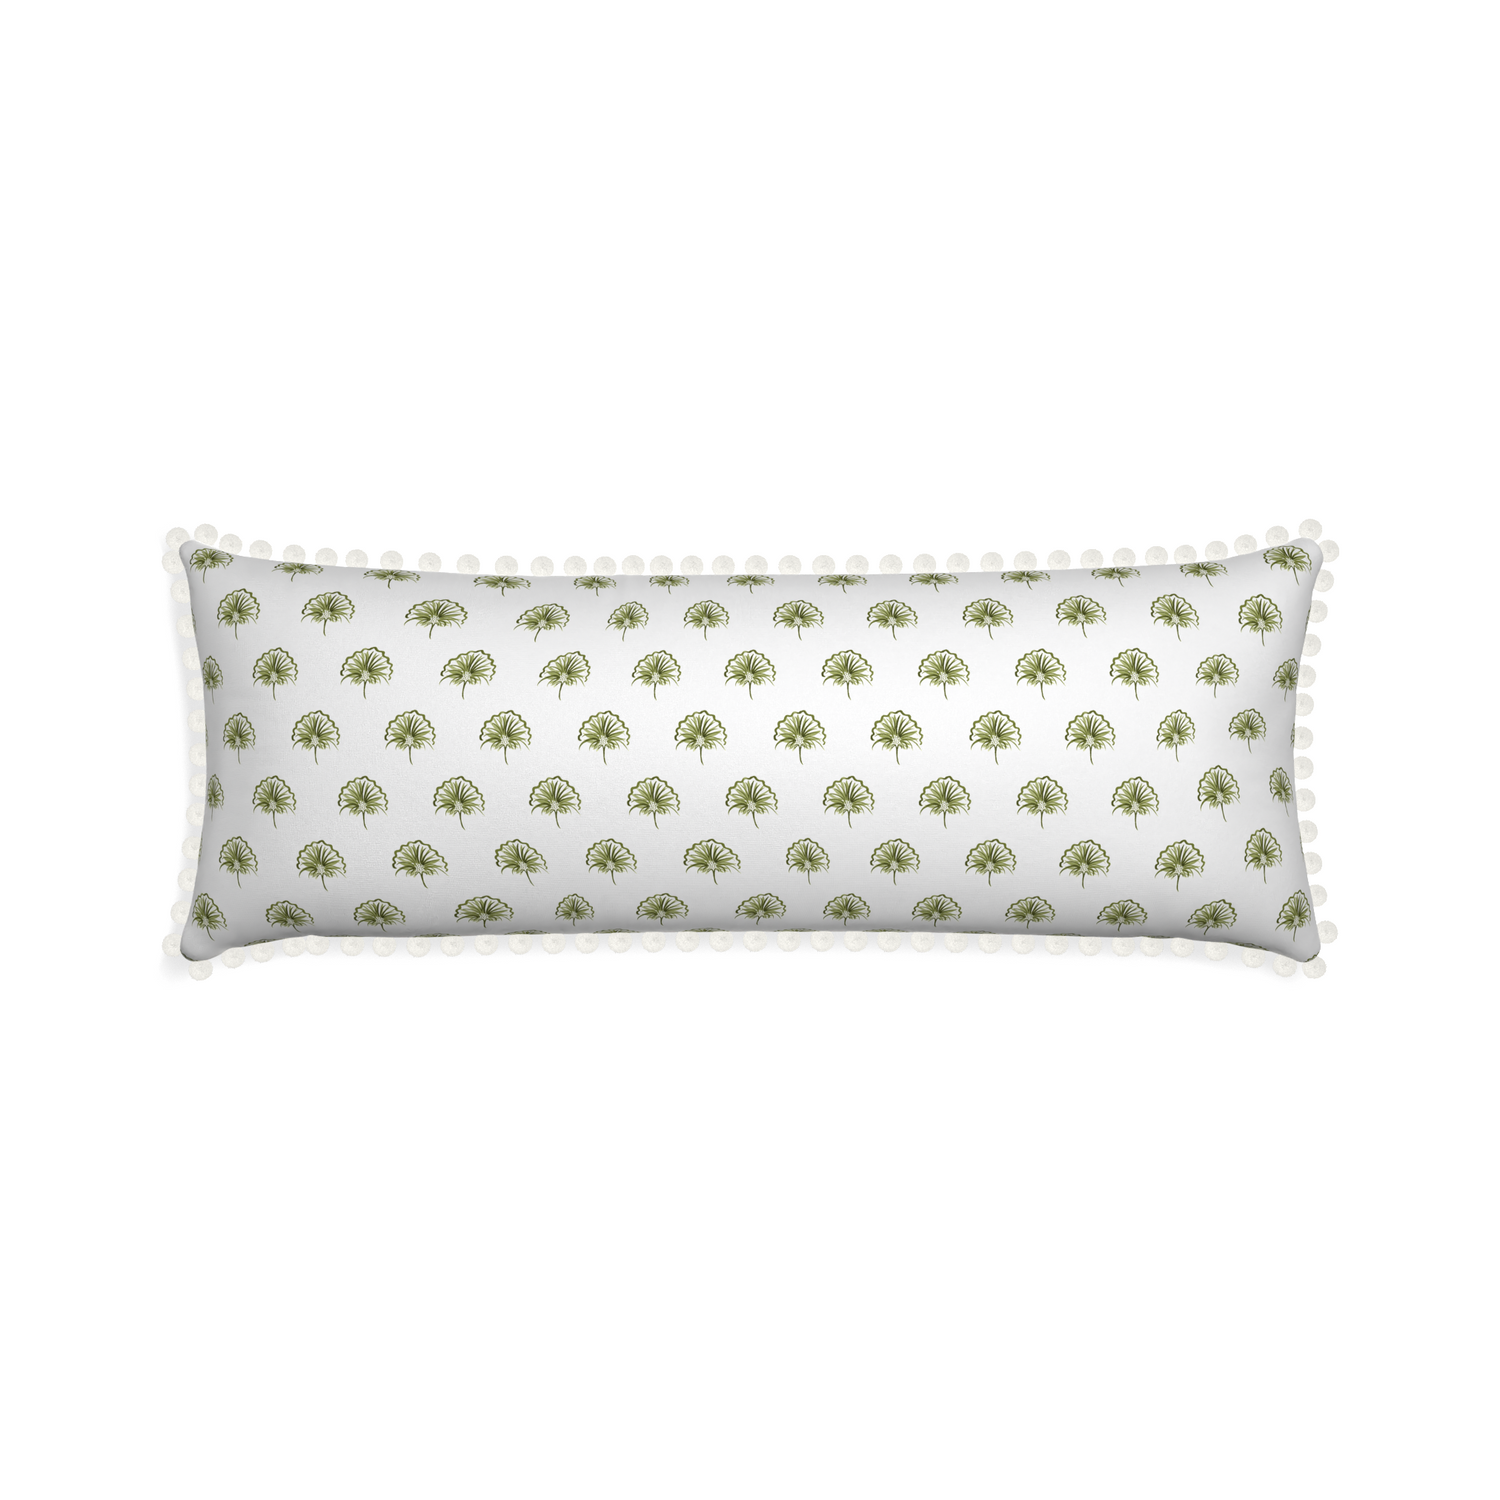 Xl-lumbar penelope moss custom pillow with snow pom pom on white background